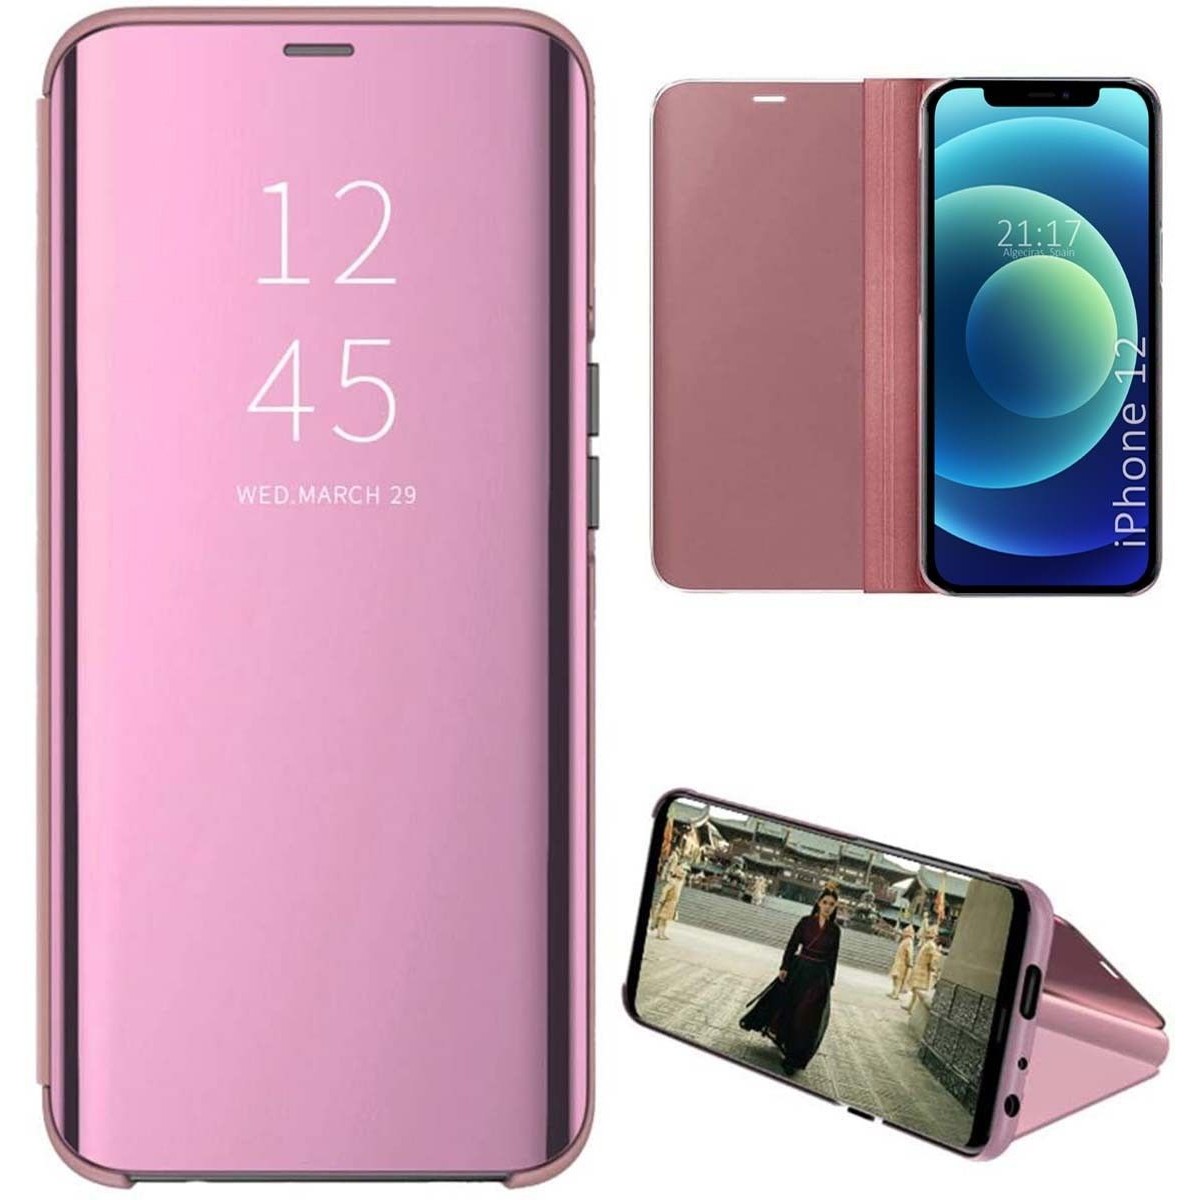 Funda Flip Cover Clear View para Iphone 12 Pro Max (6.7) color Rosa